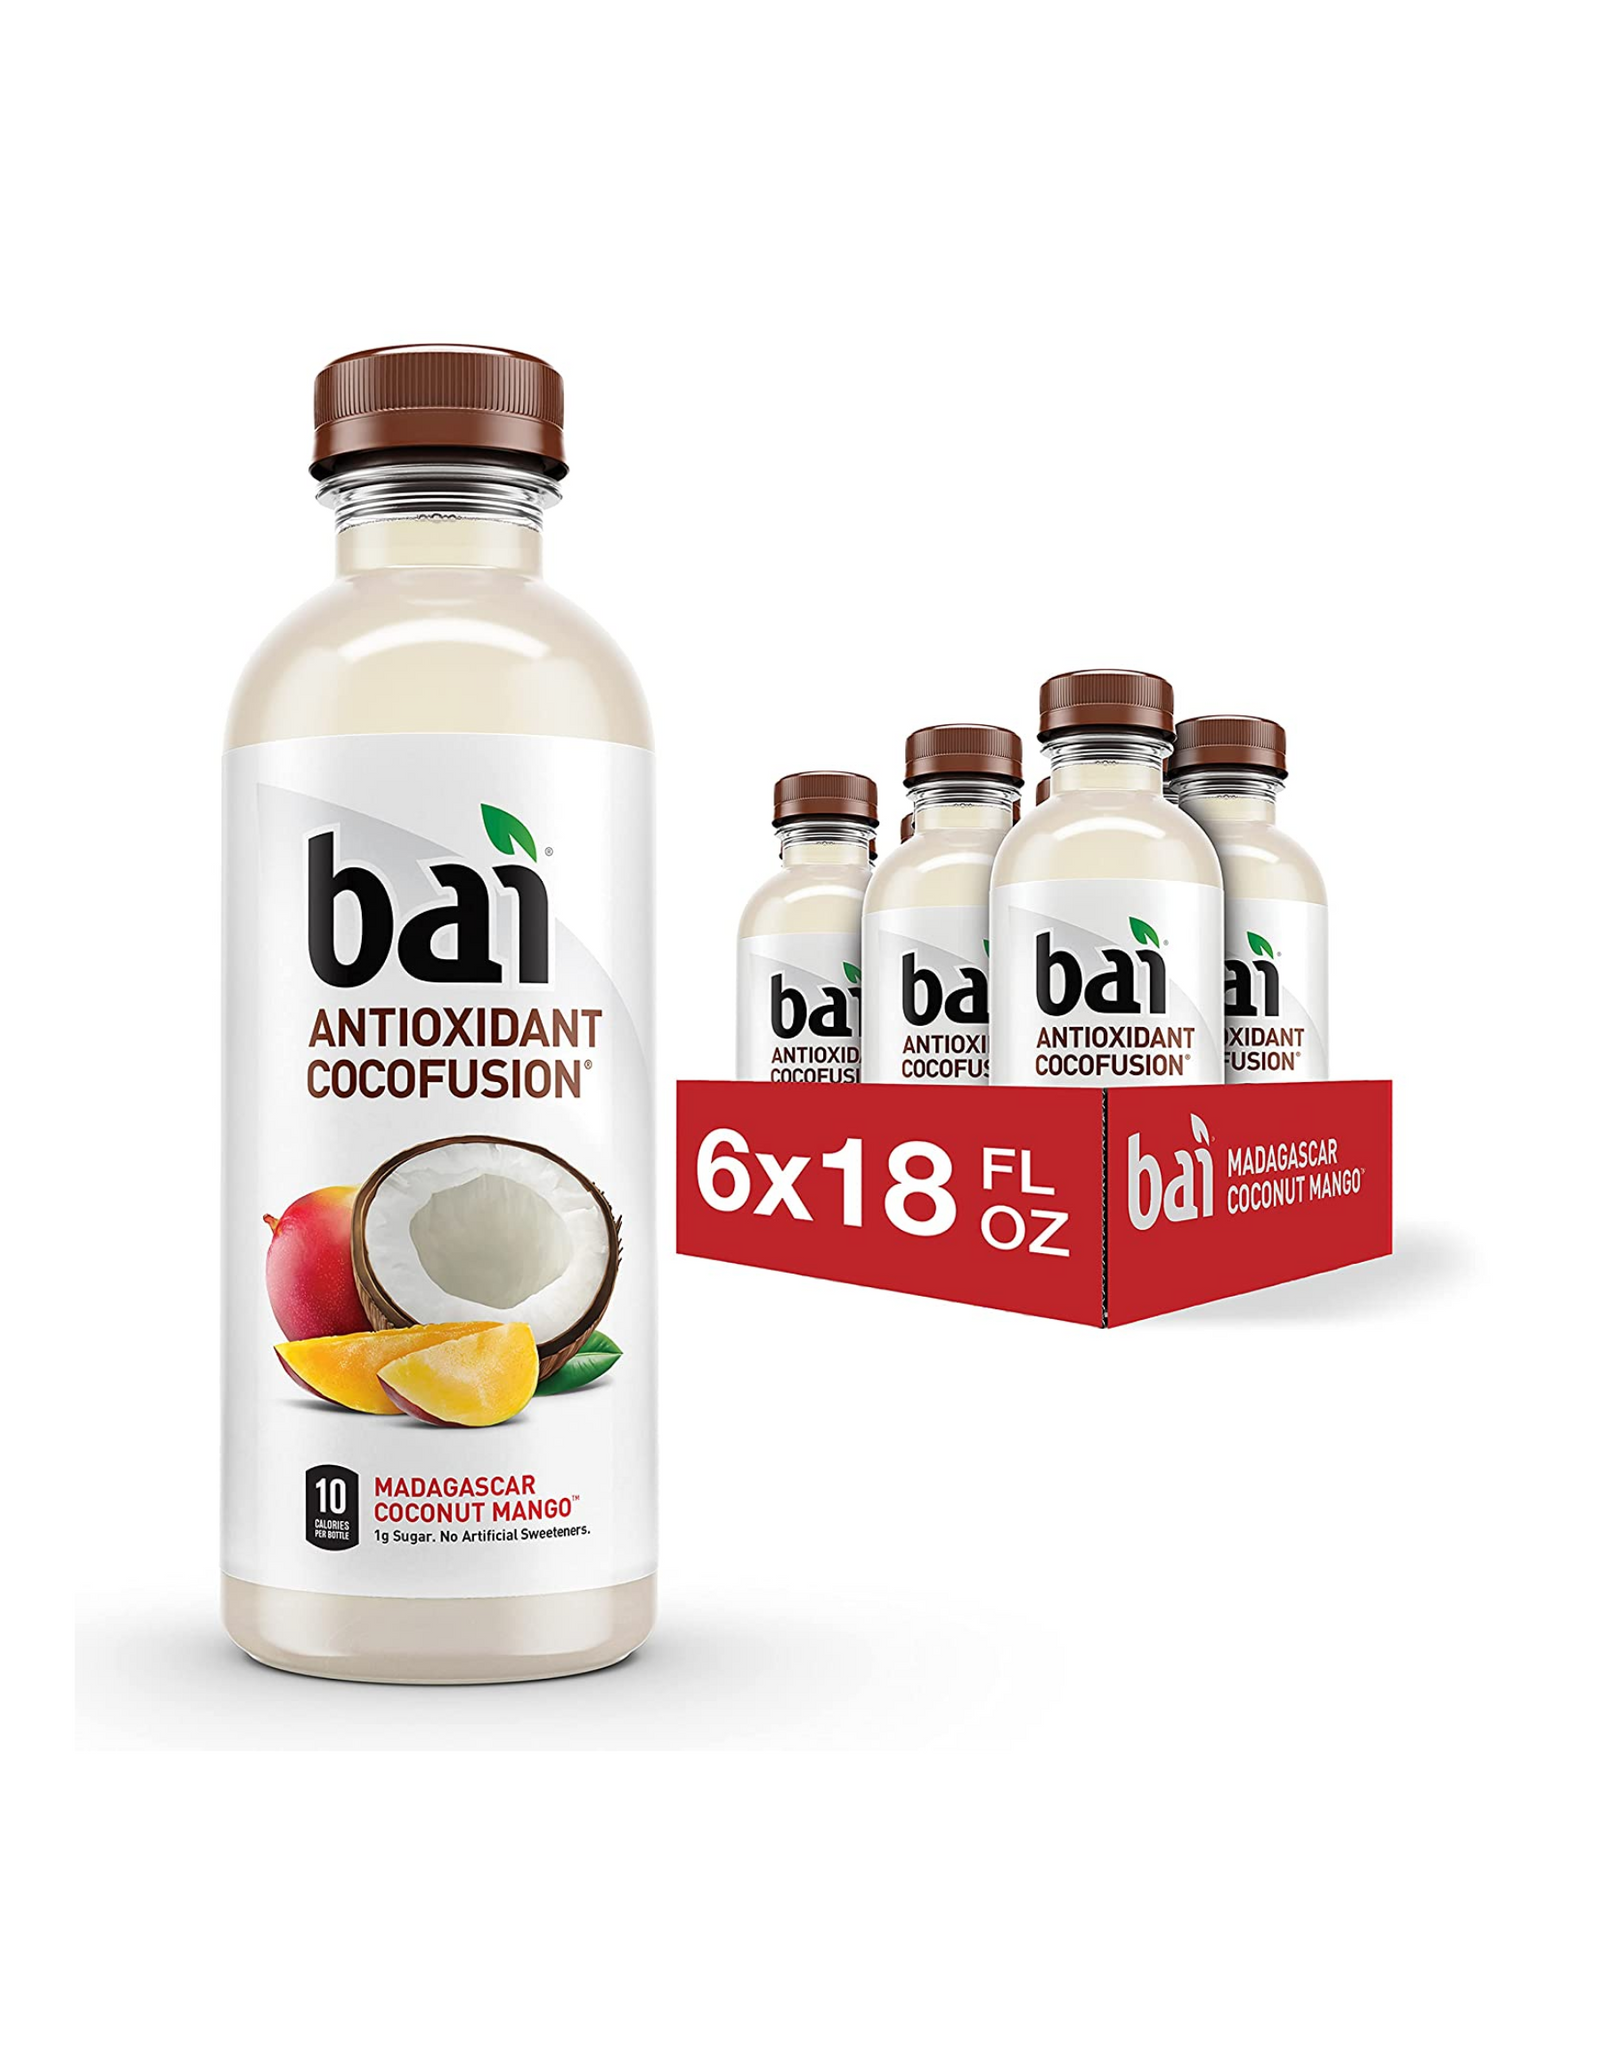 Bai Coconut Flavored Water, Antioxidant Cocofusion, Madagascar Coconut Mango, 18 fl oz (Pack of 6)